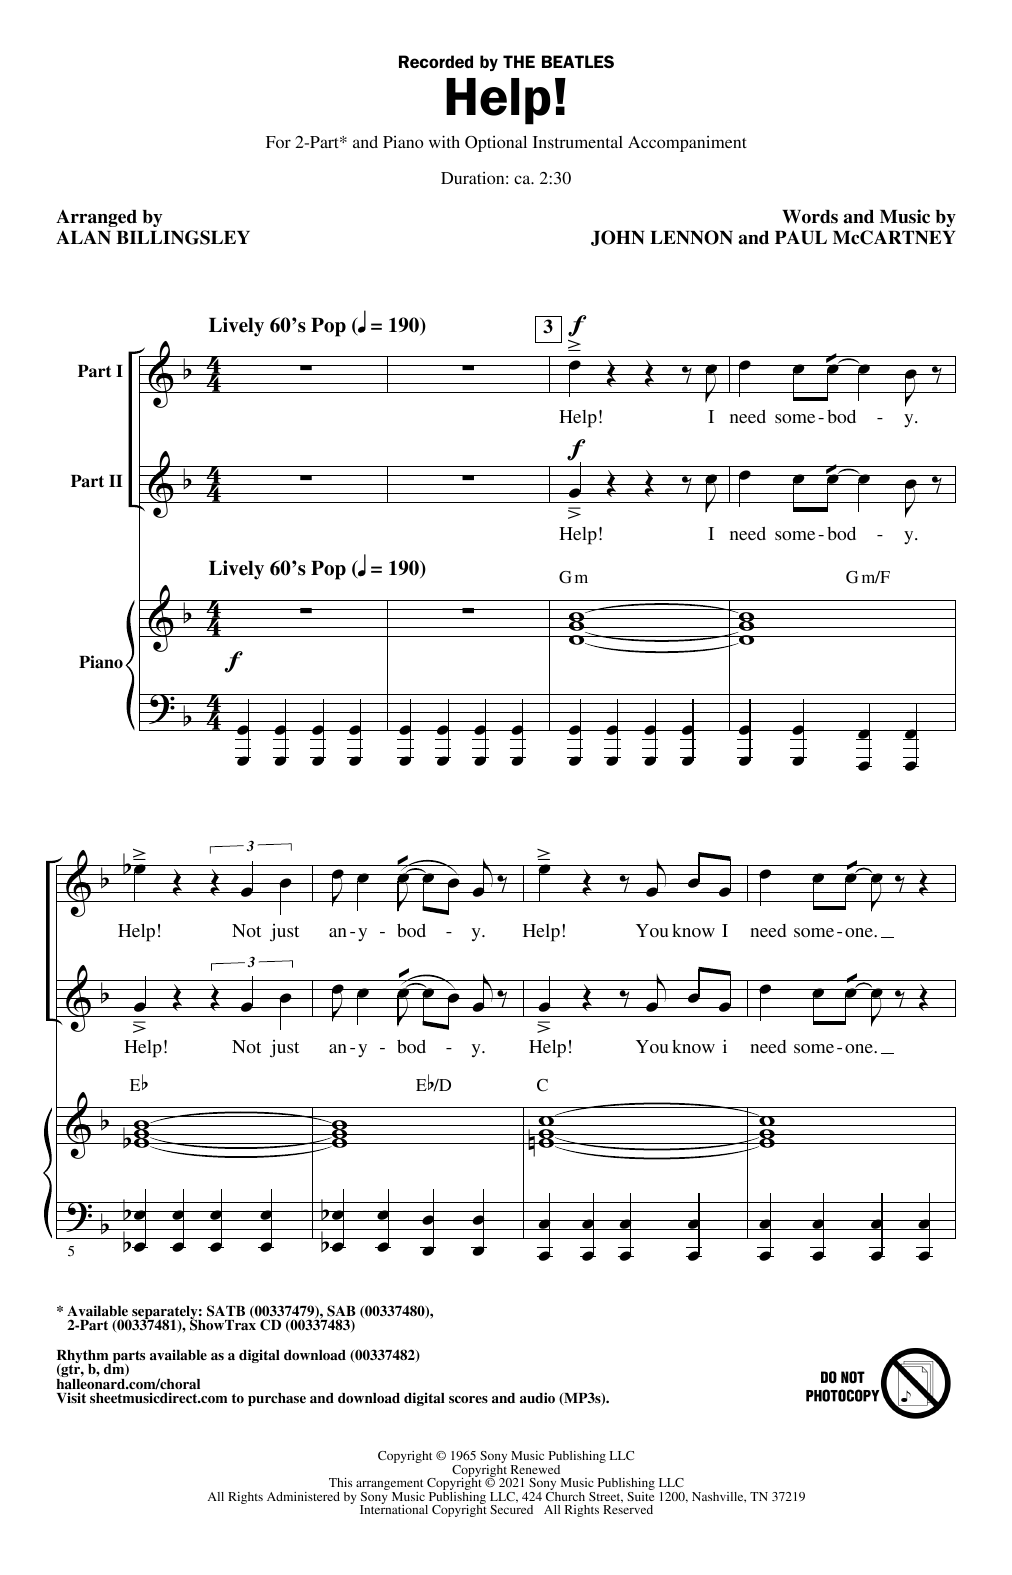 The Beatles Help! (arr. Alan Billingsley) Sheet Music Notes & Chords for 2-Part Choir - Download or Print PDF